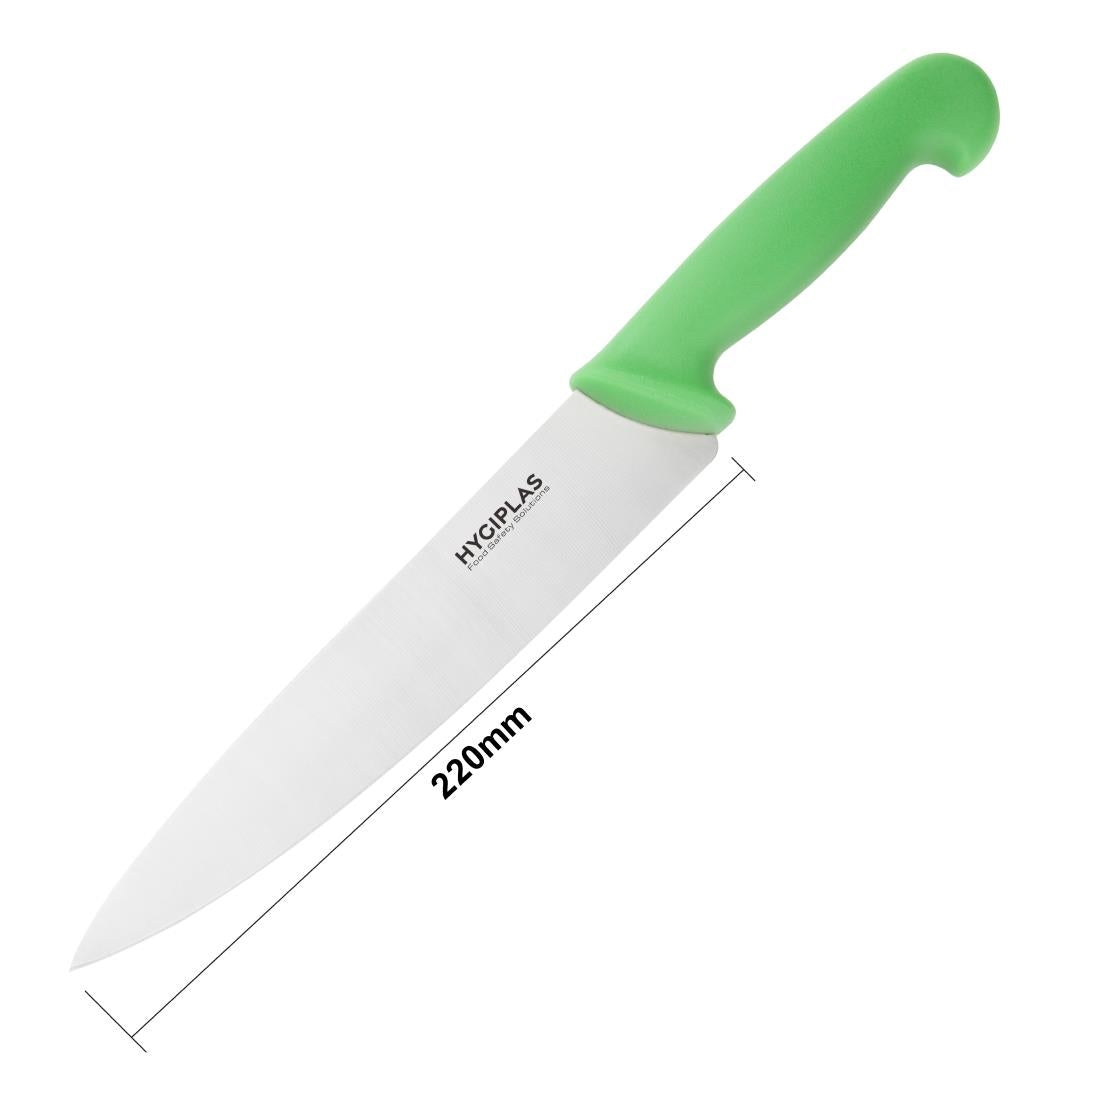 C861 Hygiplas Chef Knife Green 21.5cm JD Catering Equipment Solutions Ltd